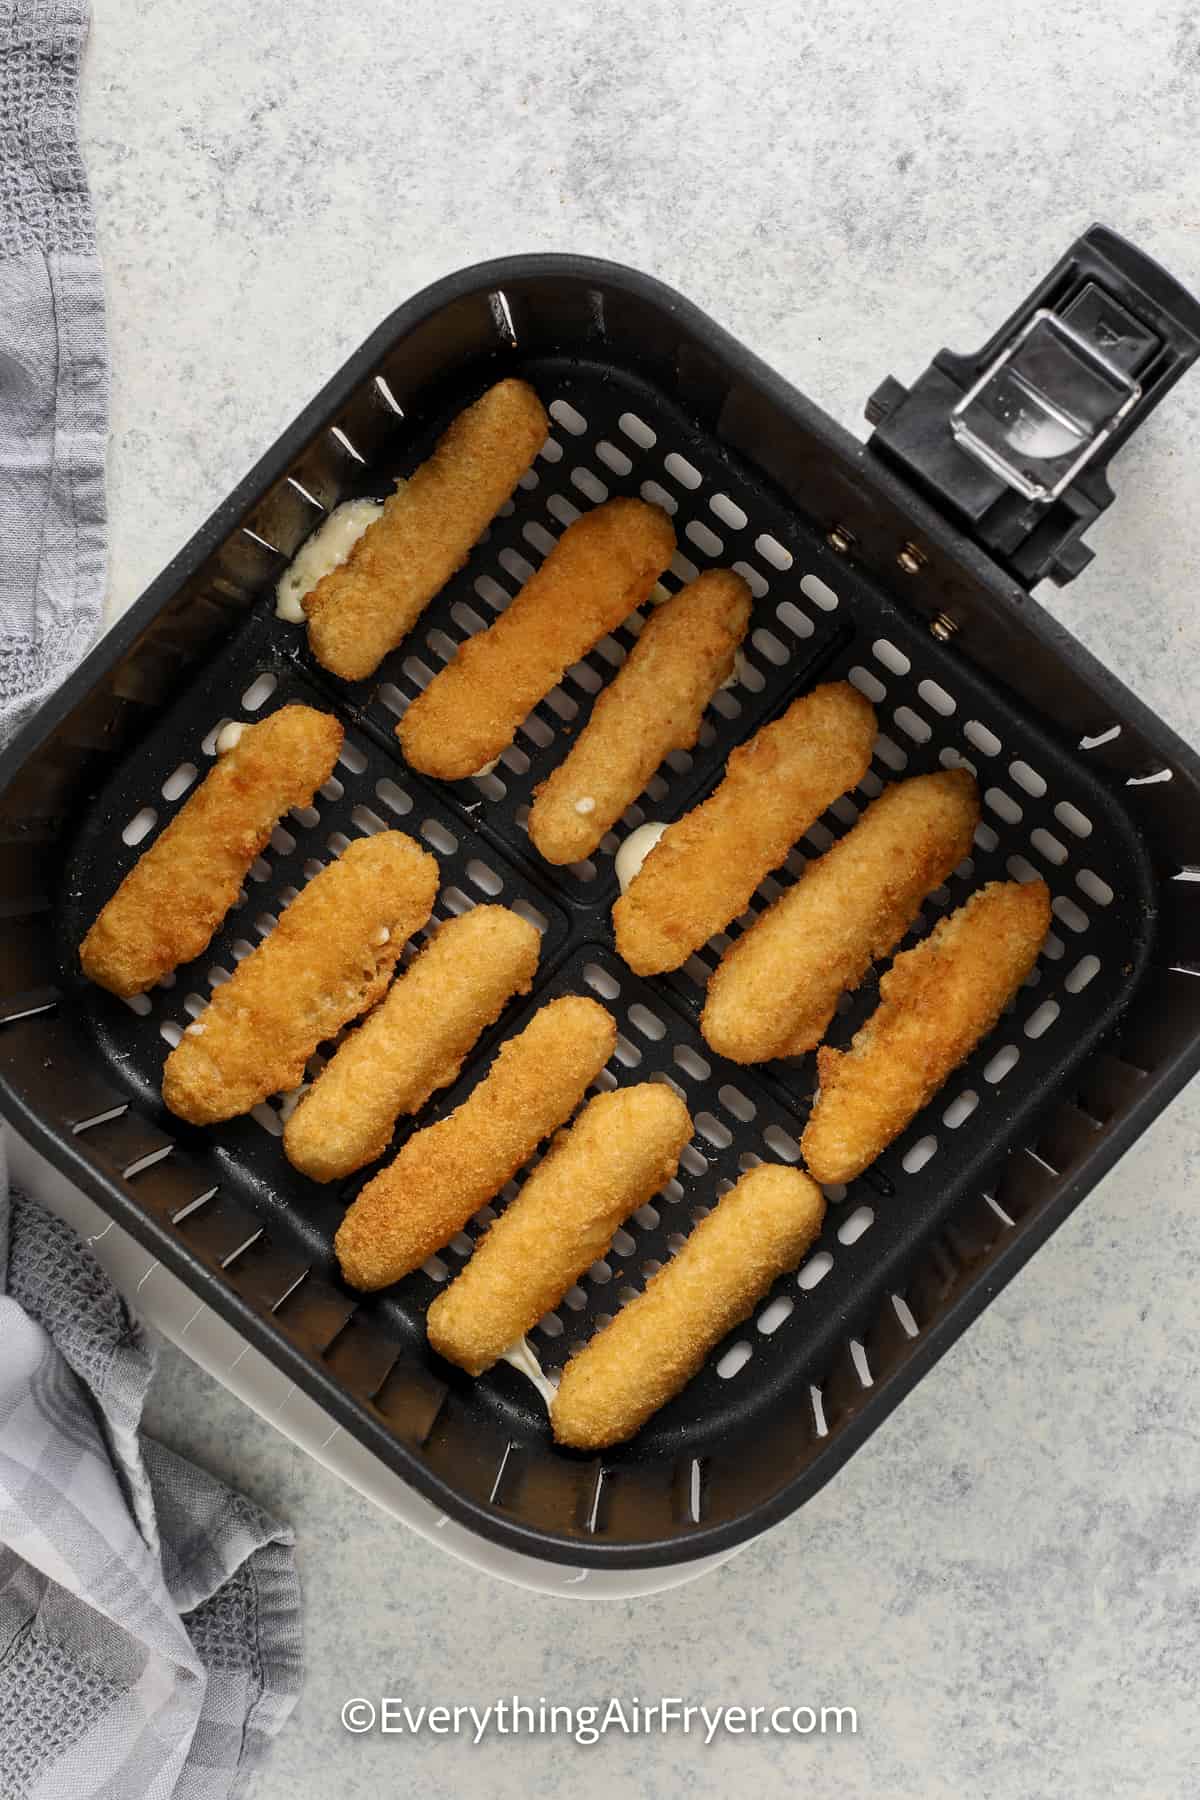 mozzarella sticks in an air fryer tray